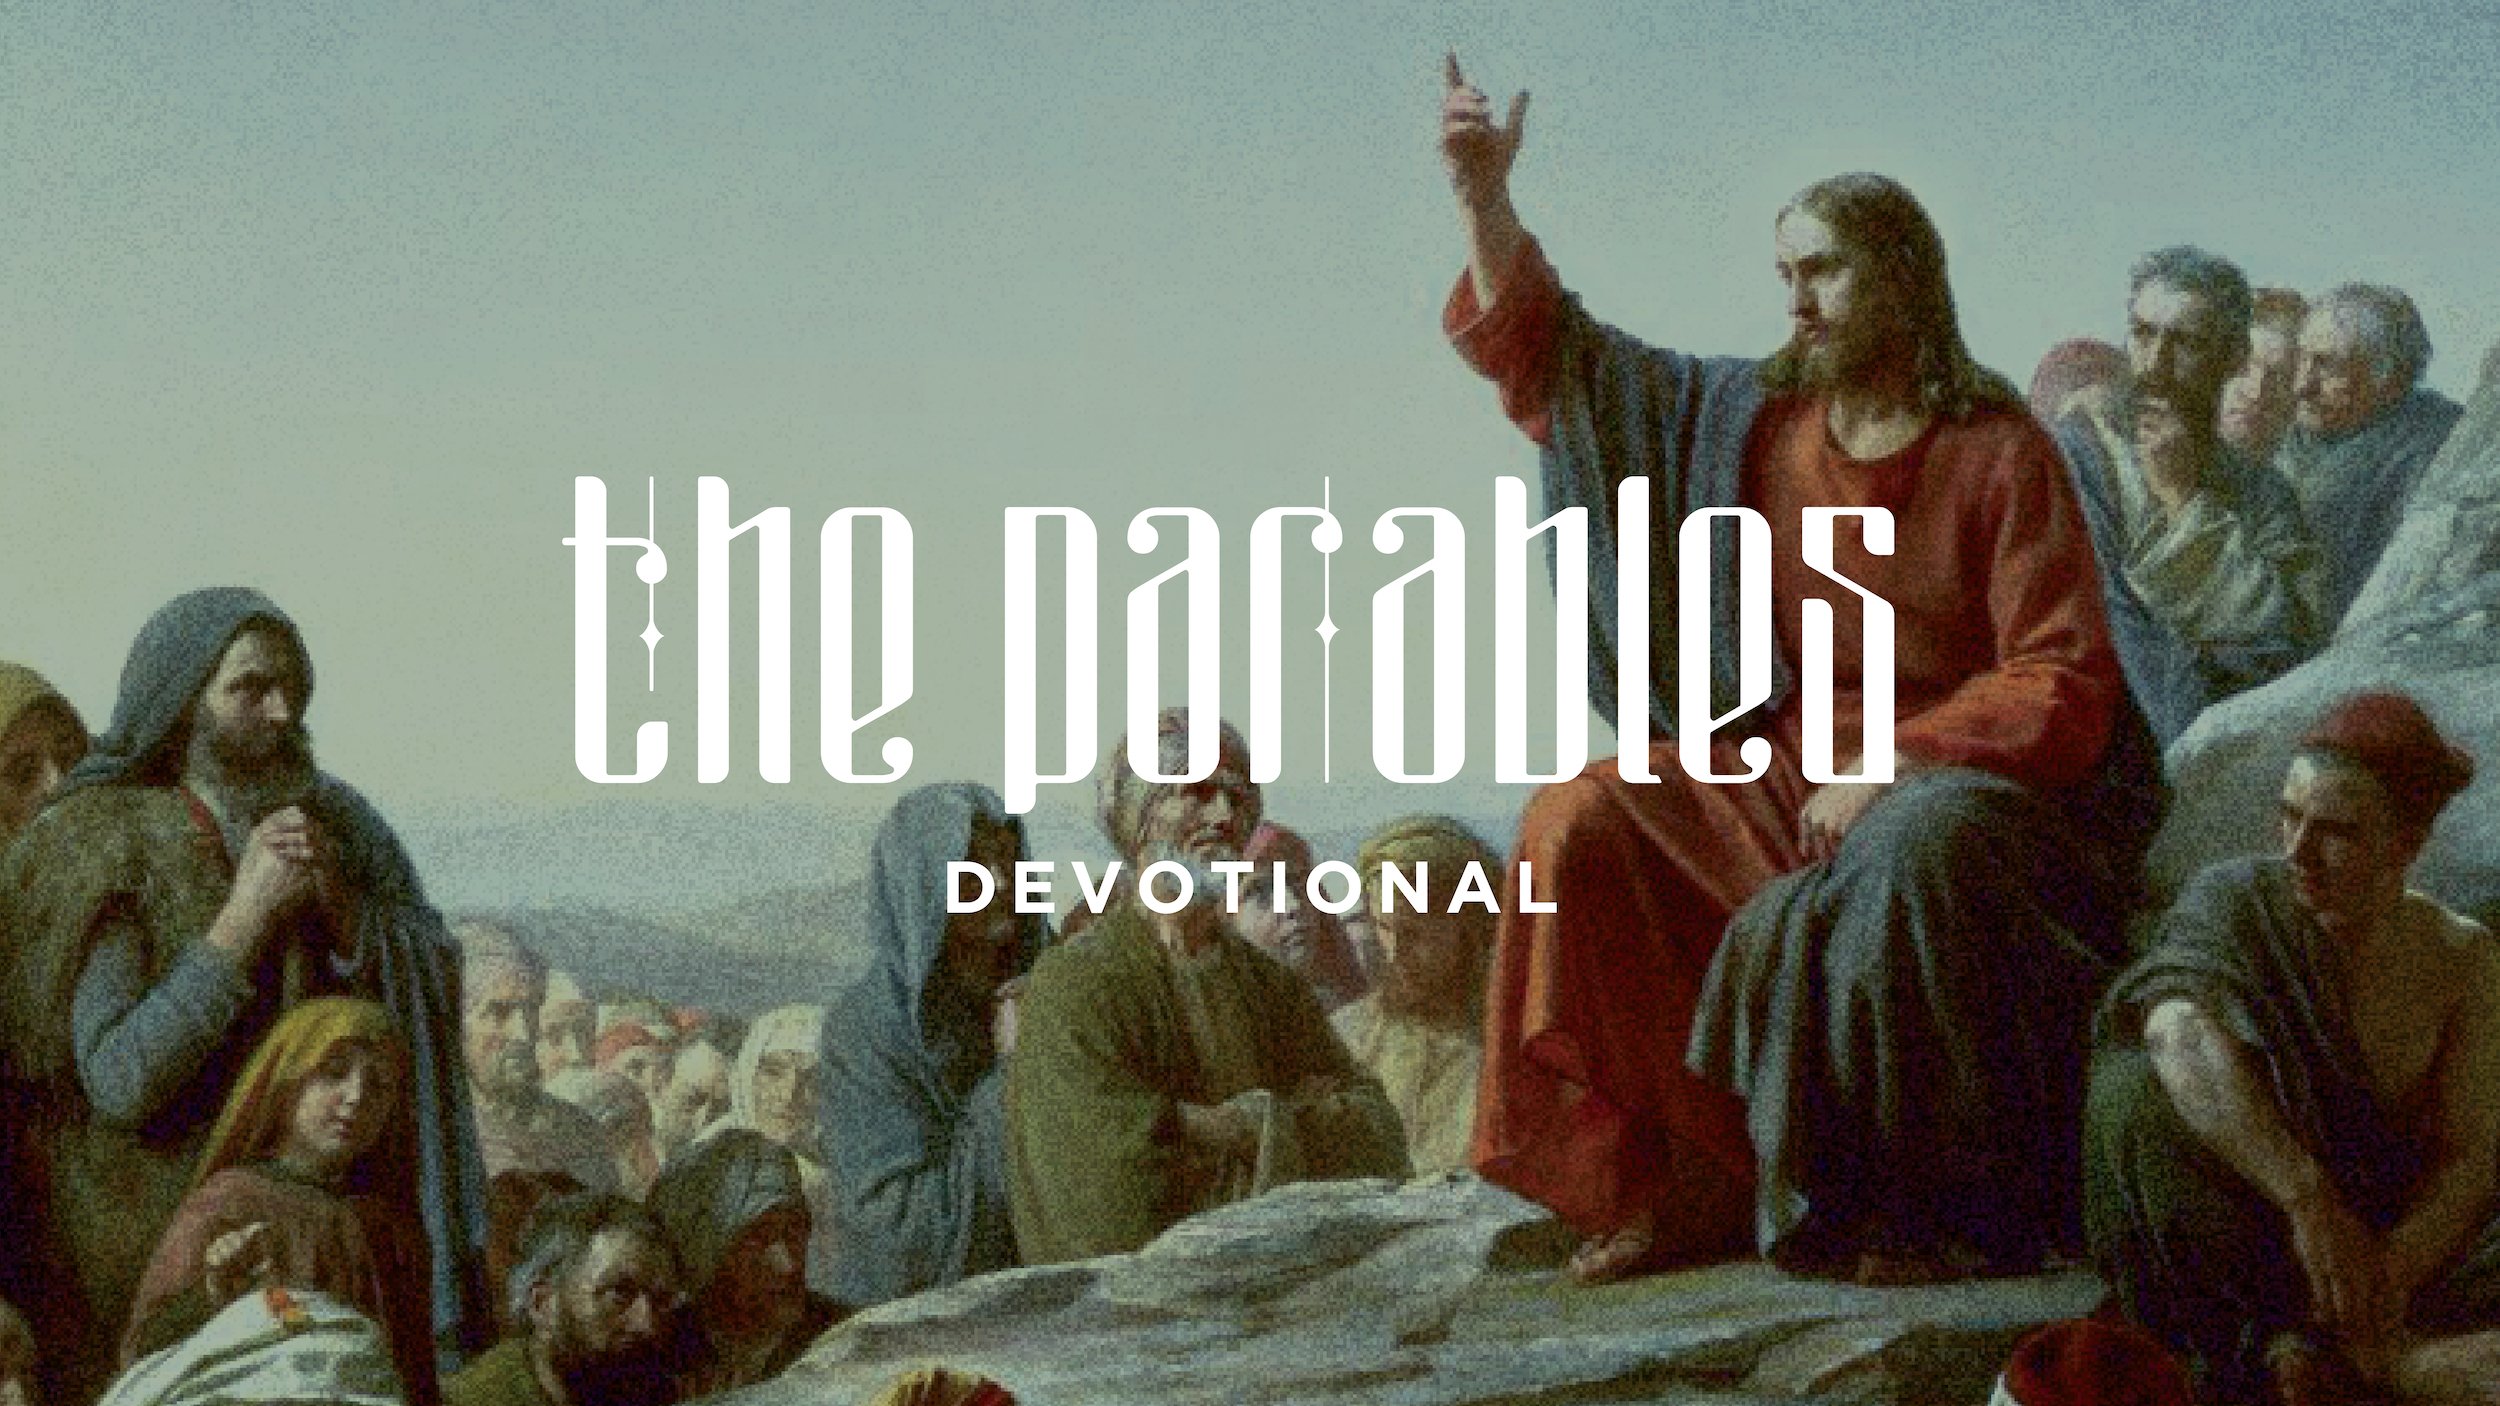 parables devotional app icon.jpg